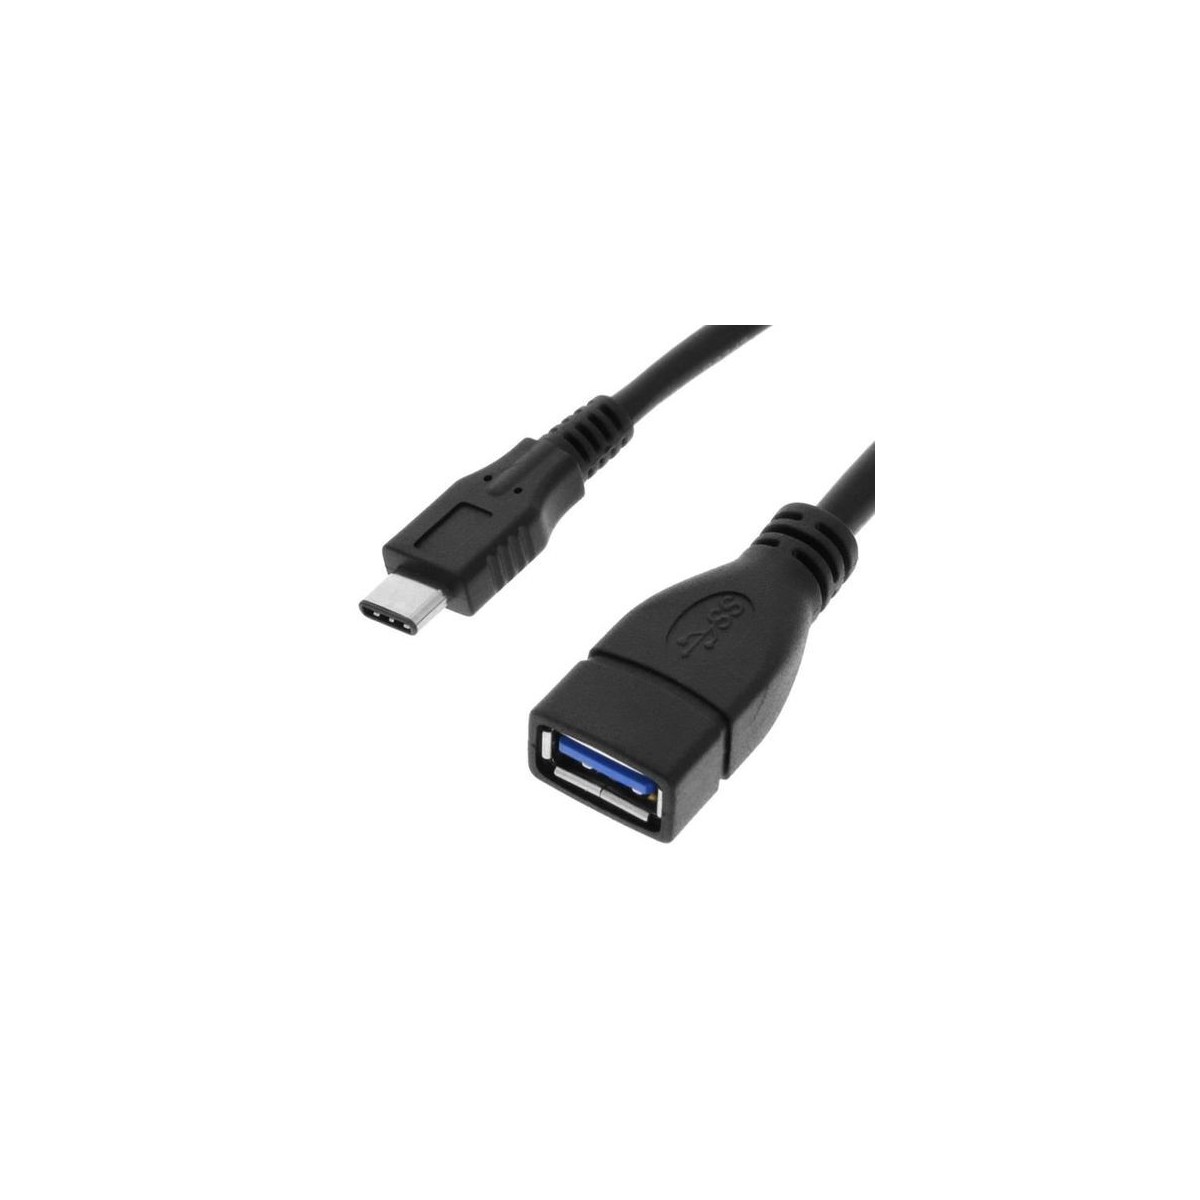 Cable adaptateur USB OTG Femelle vers USB Type C Male